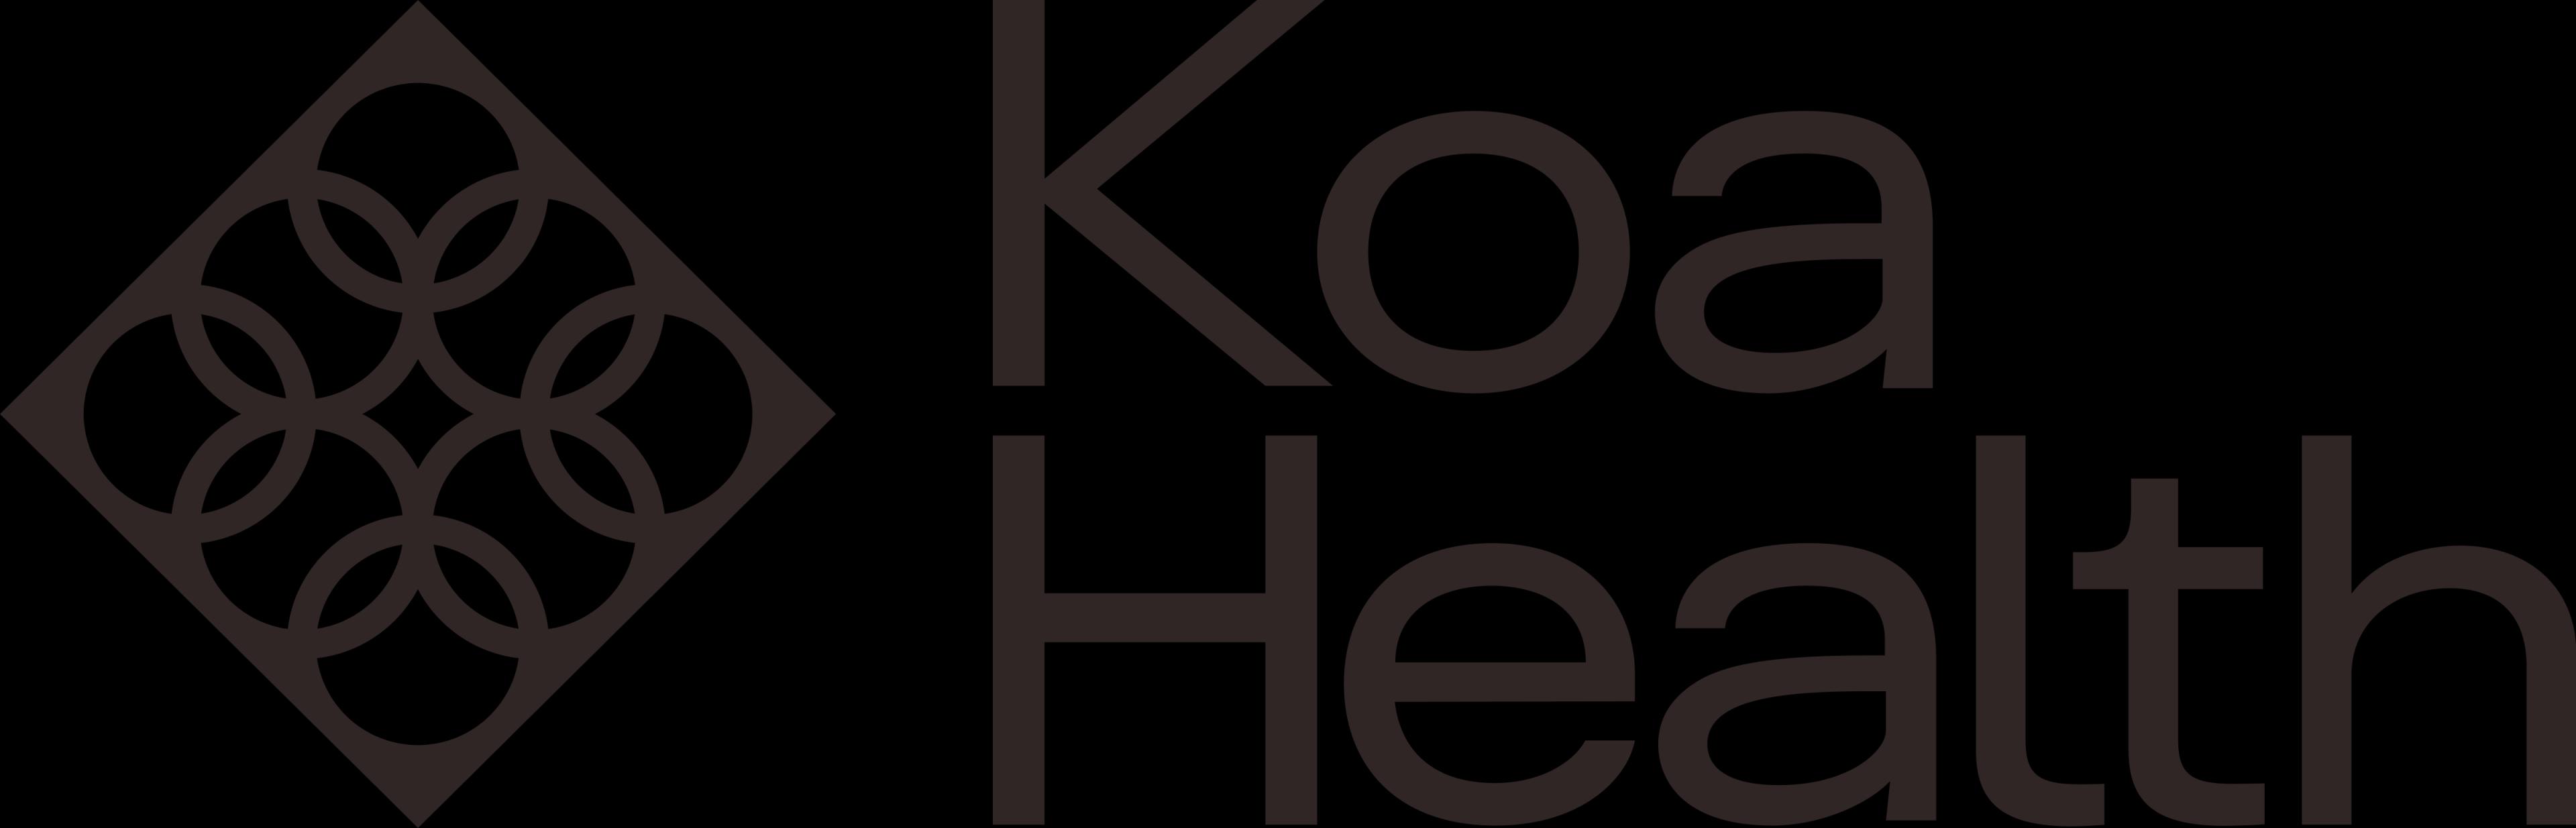 Koa Health_logo